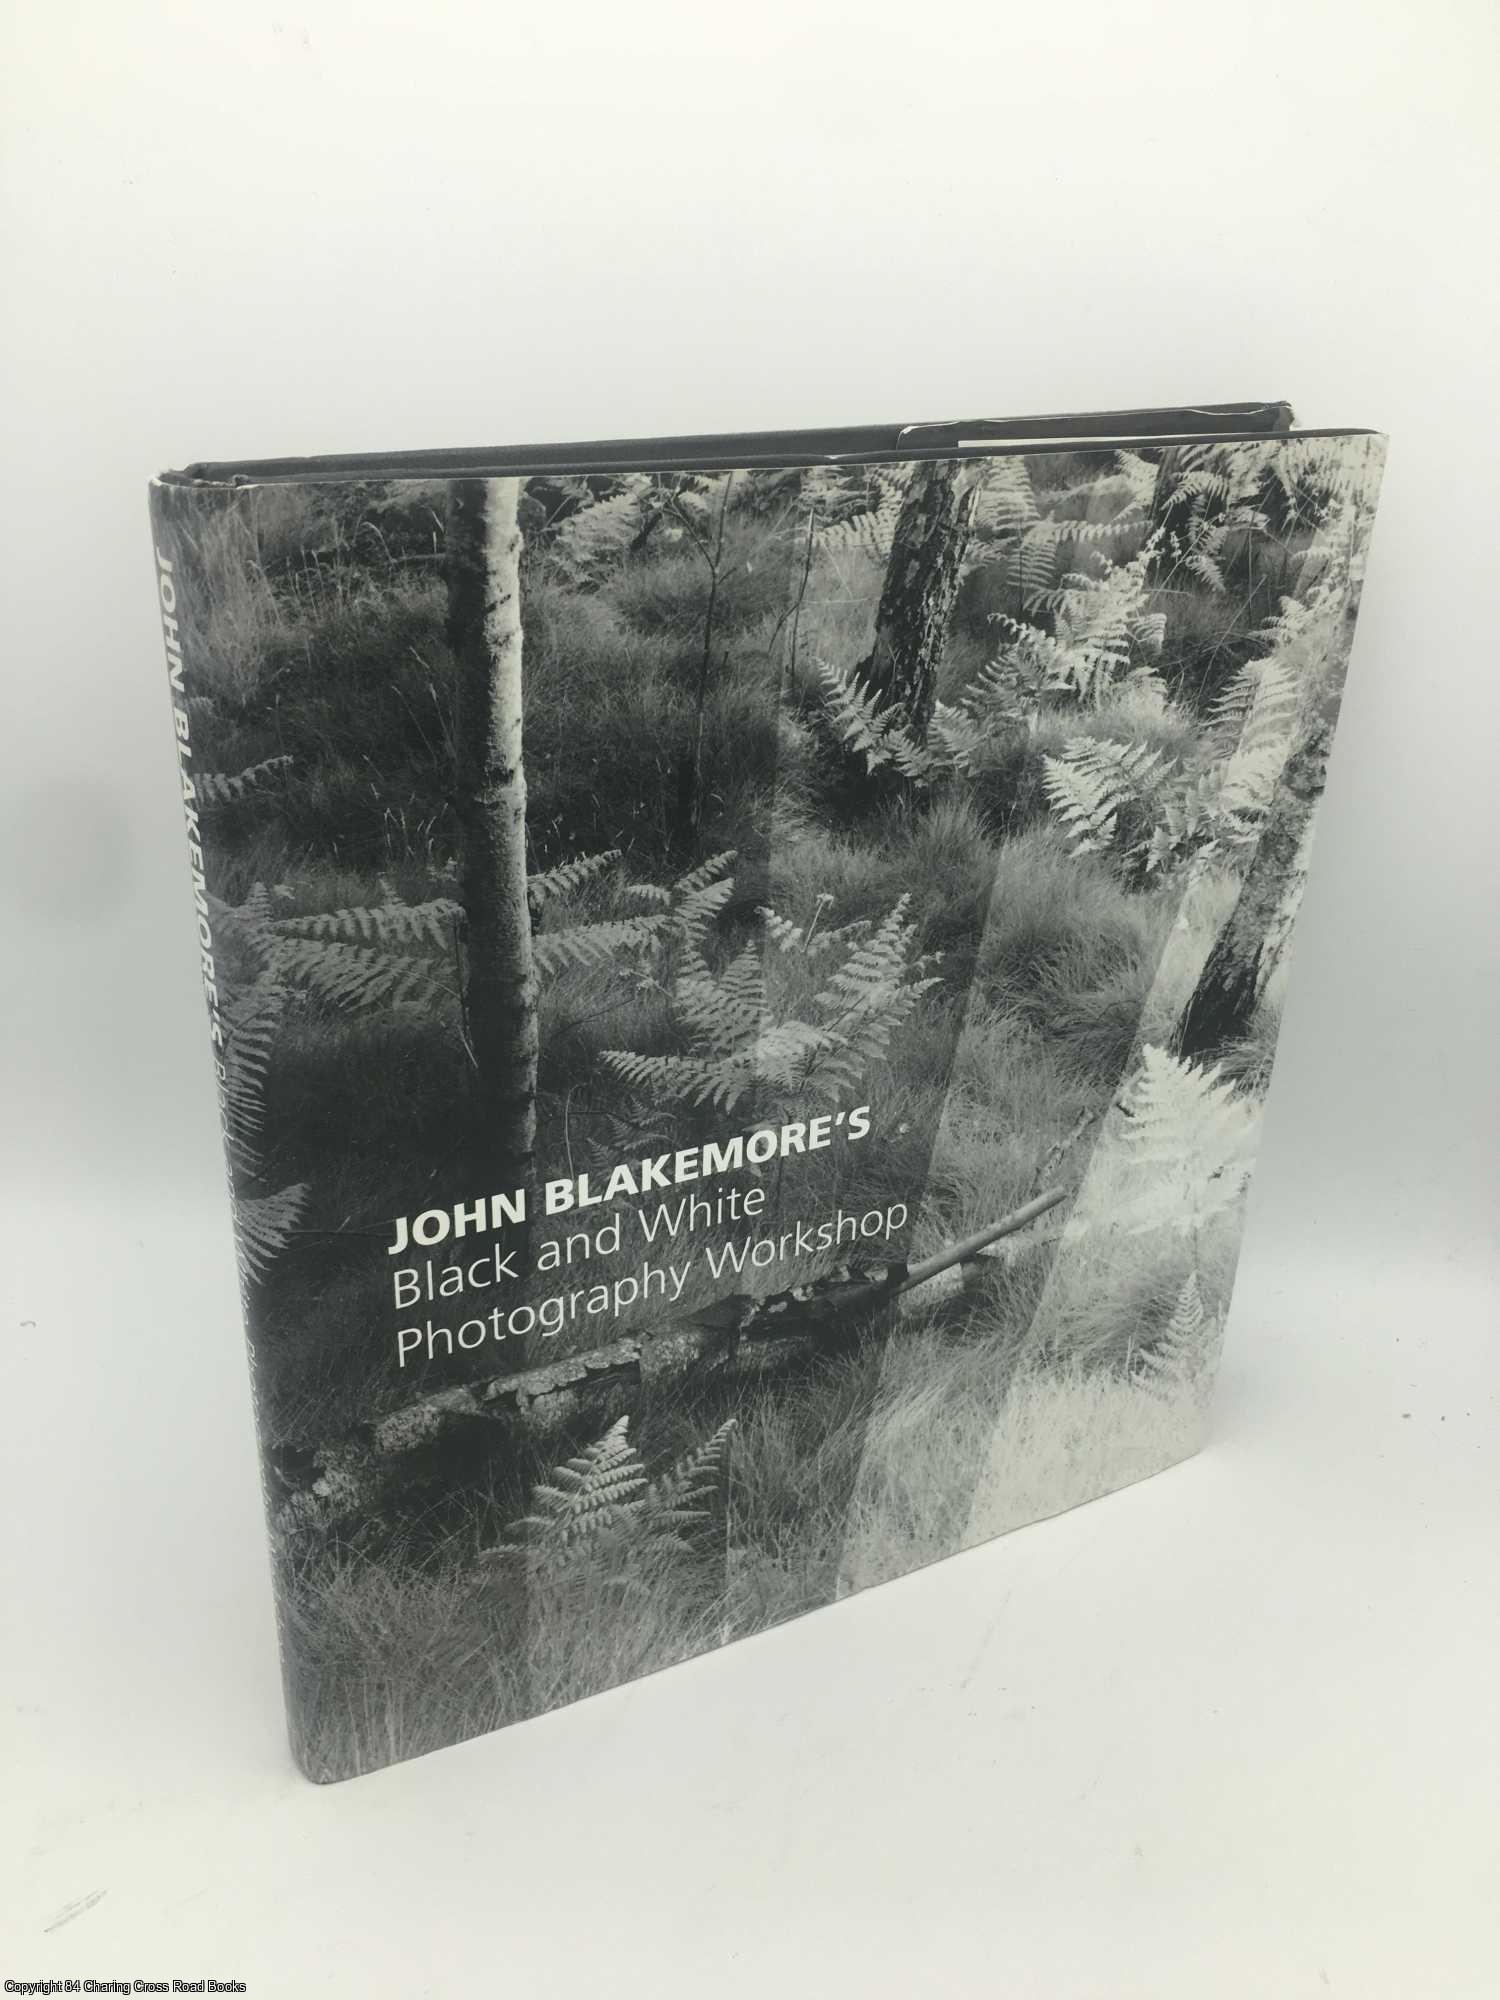 Blakemore, John - John Blakemore's Black and White Photography Workshop